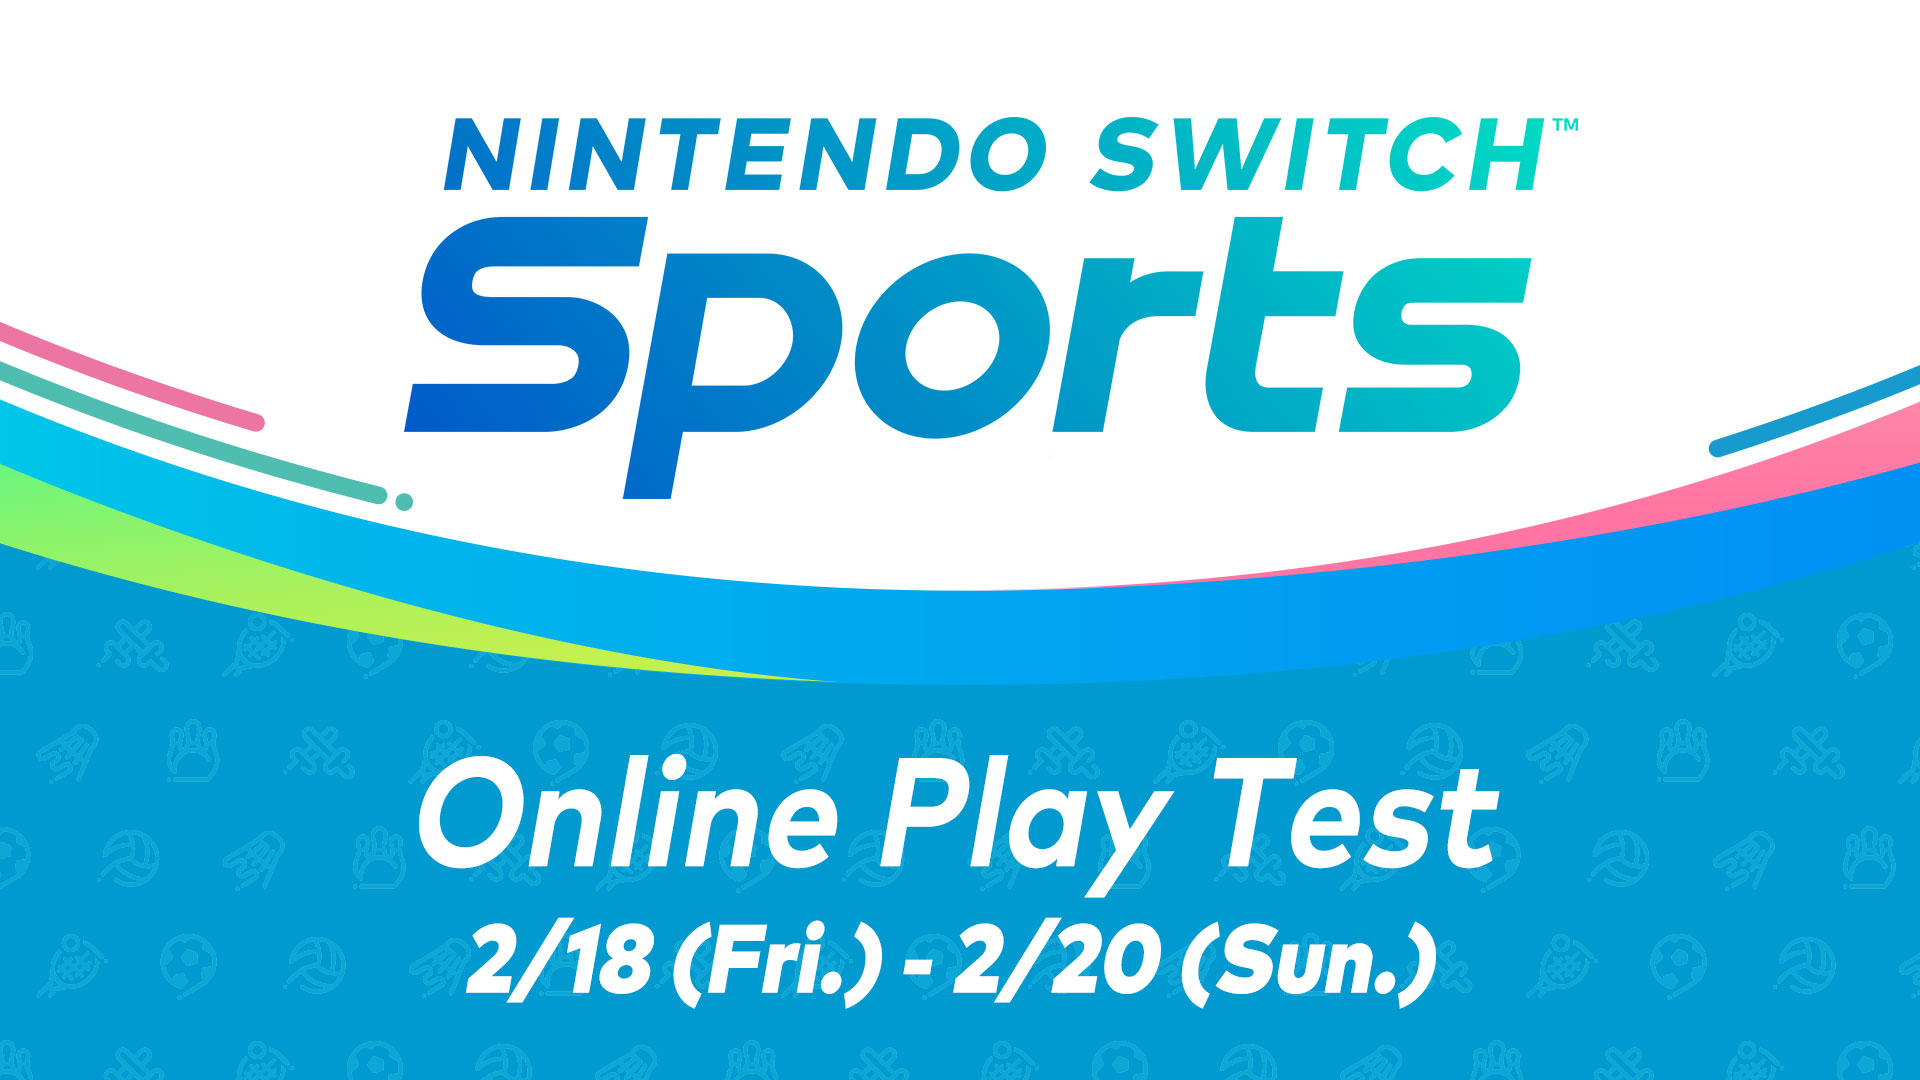 Nintendo Switch™ Sports Online Play Test